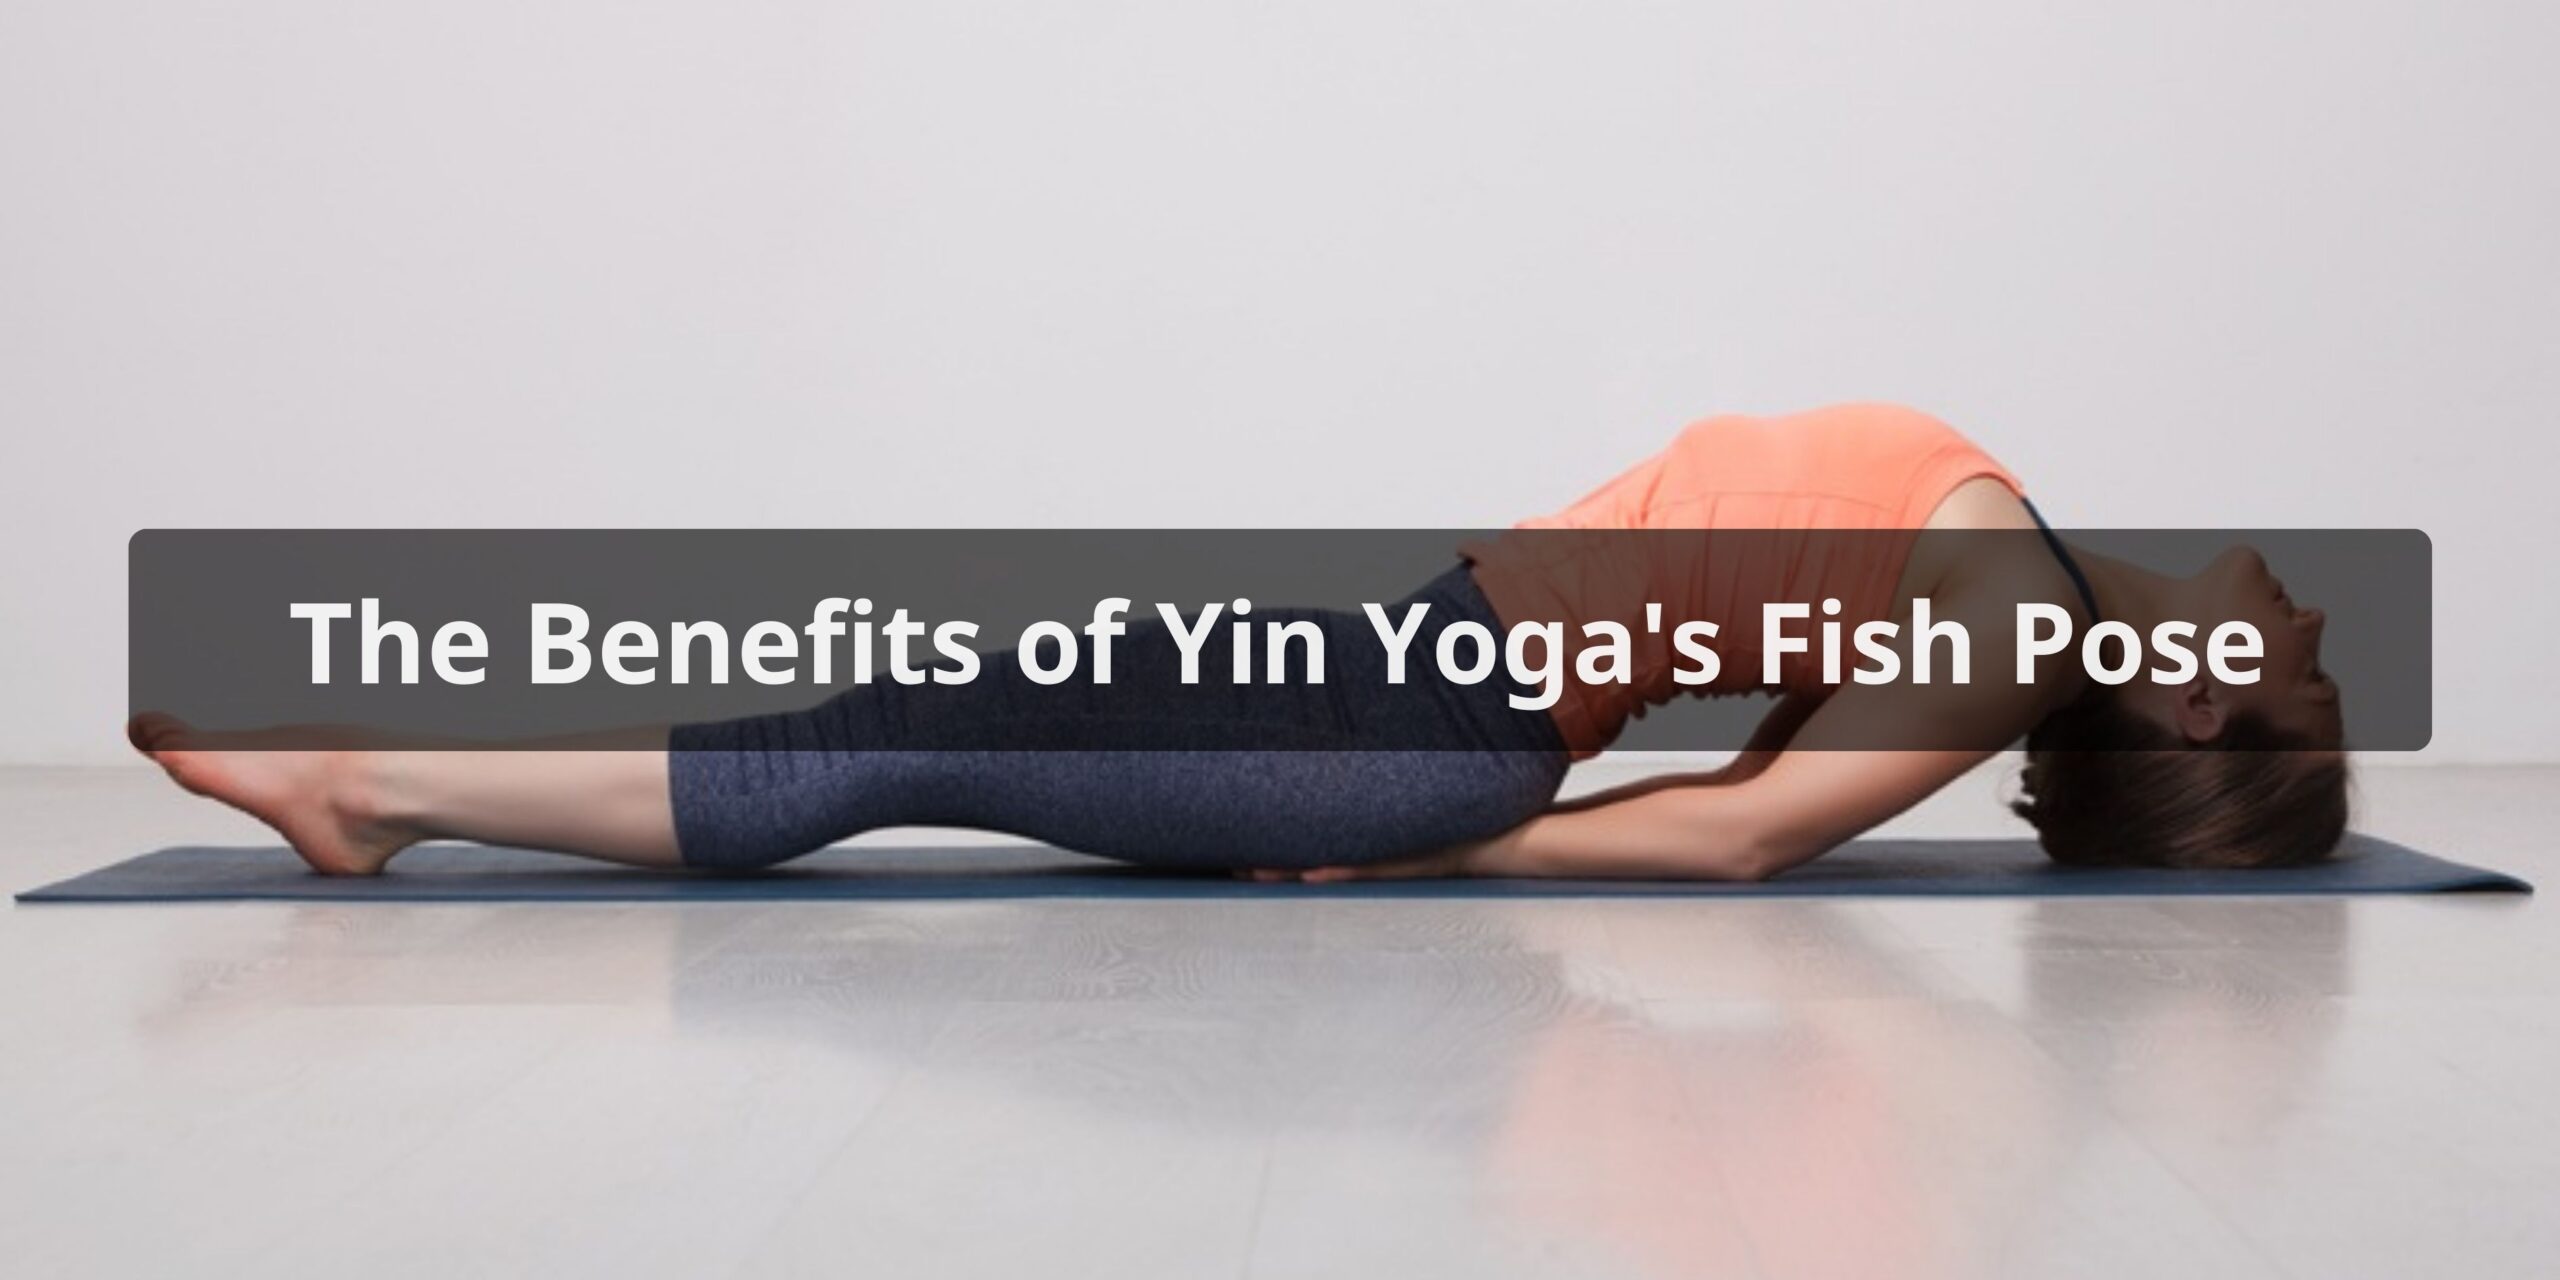 The Benefits of Yin Yoga's Fish Pose